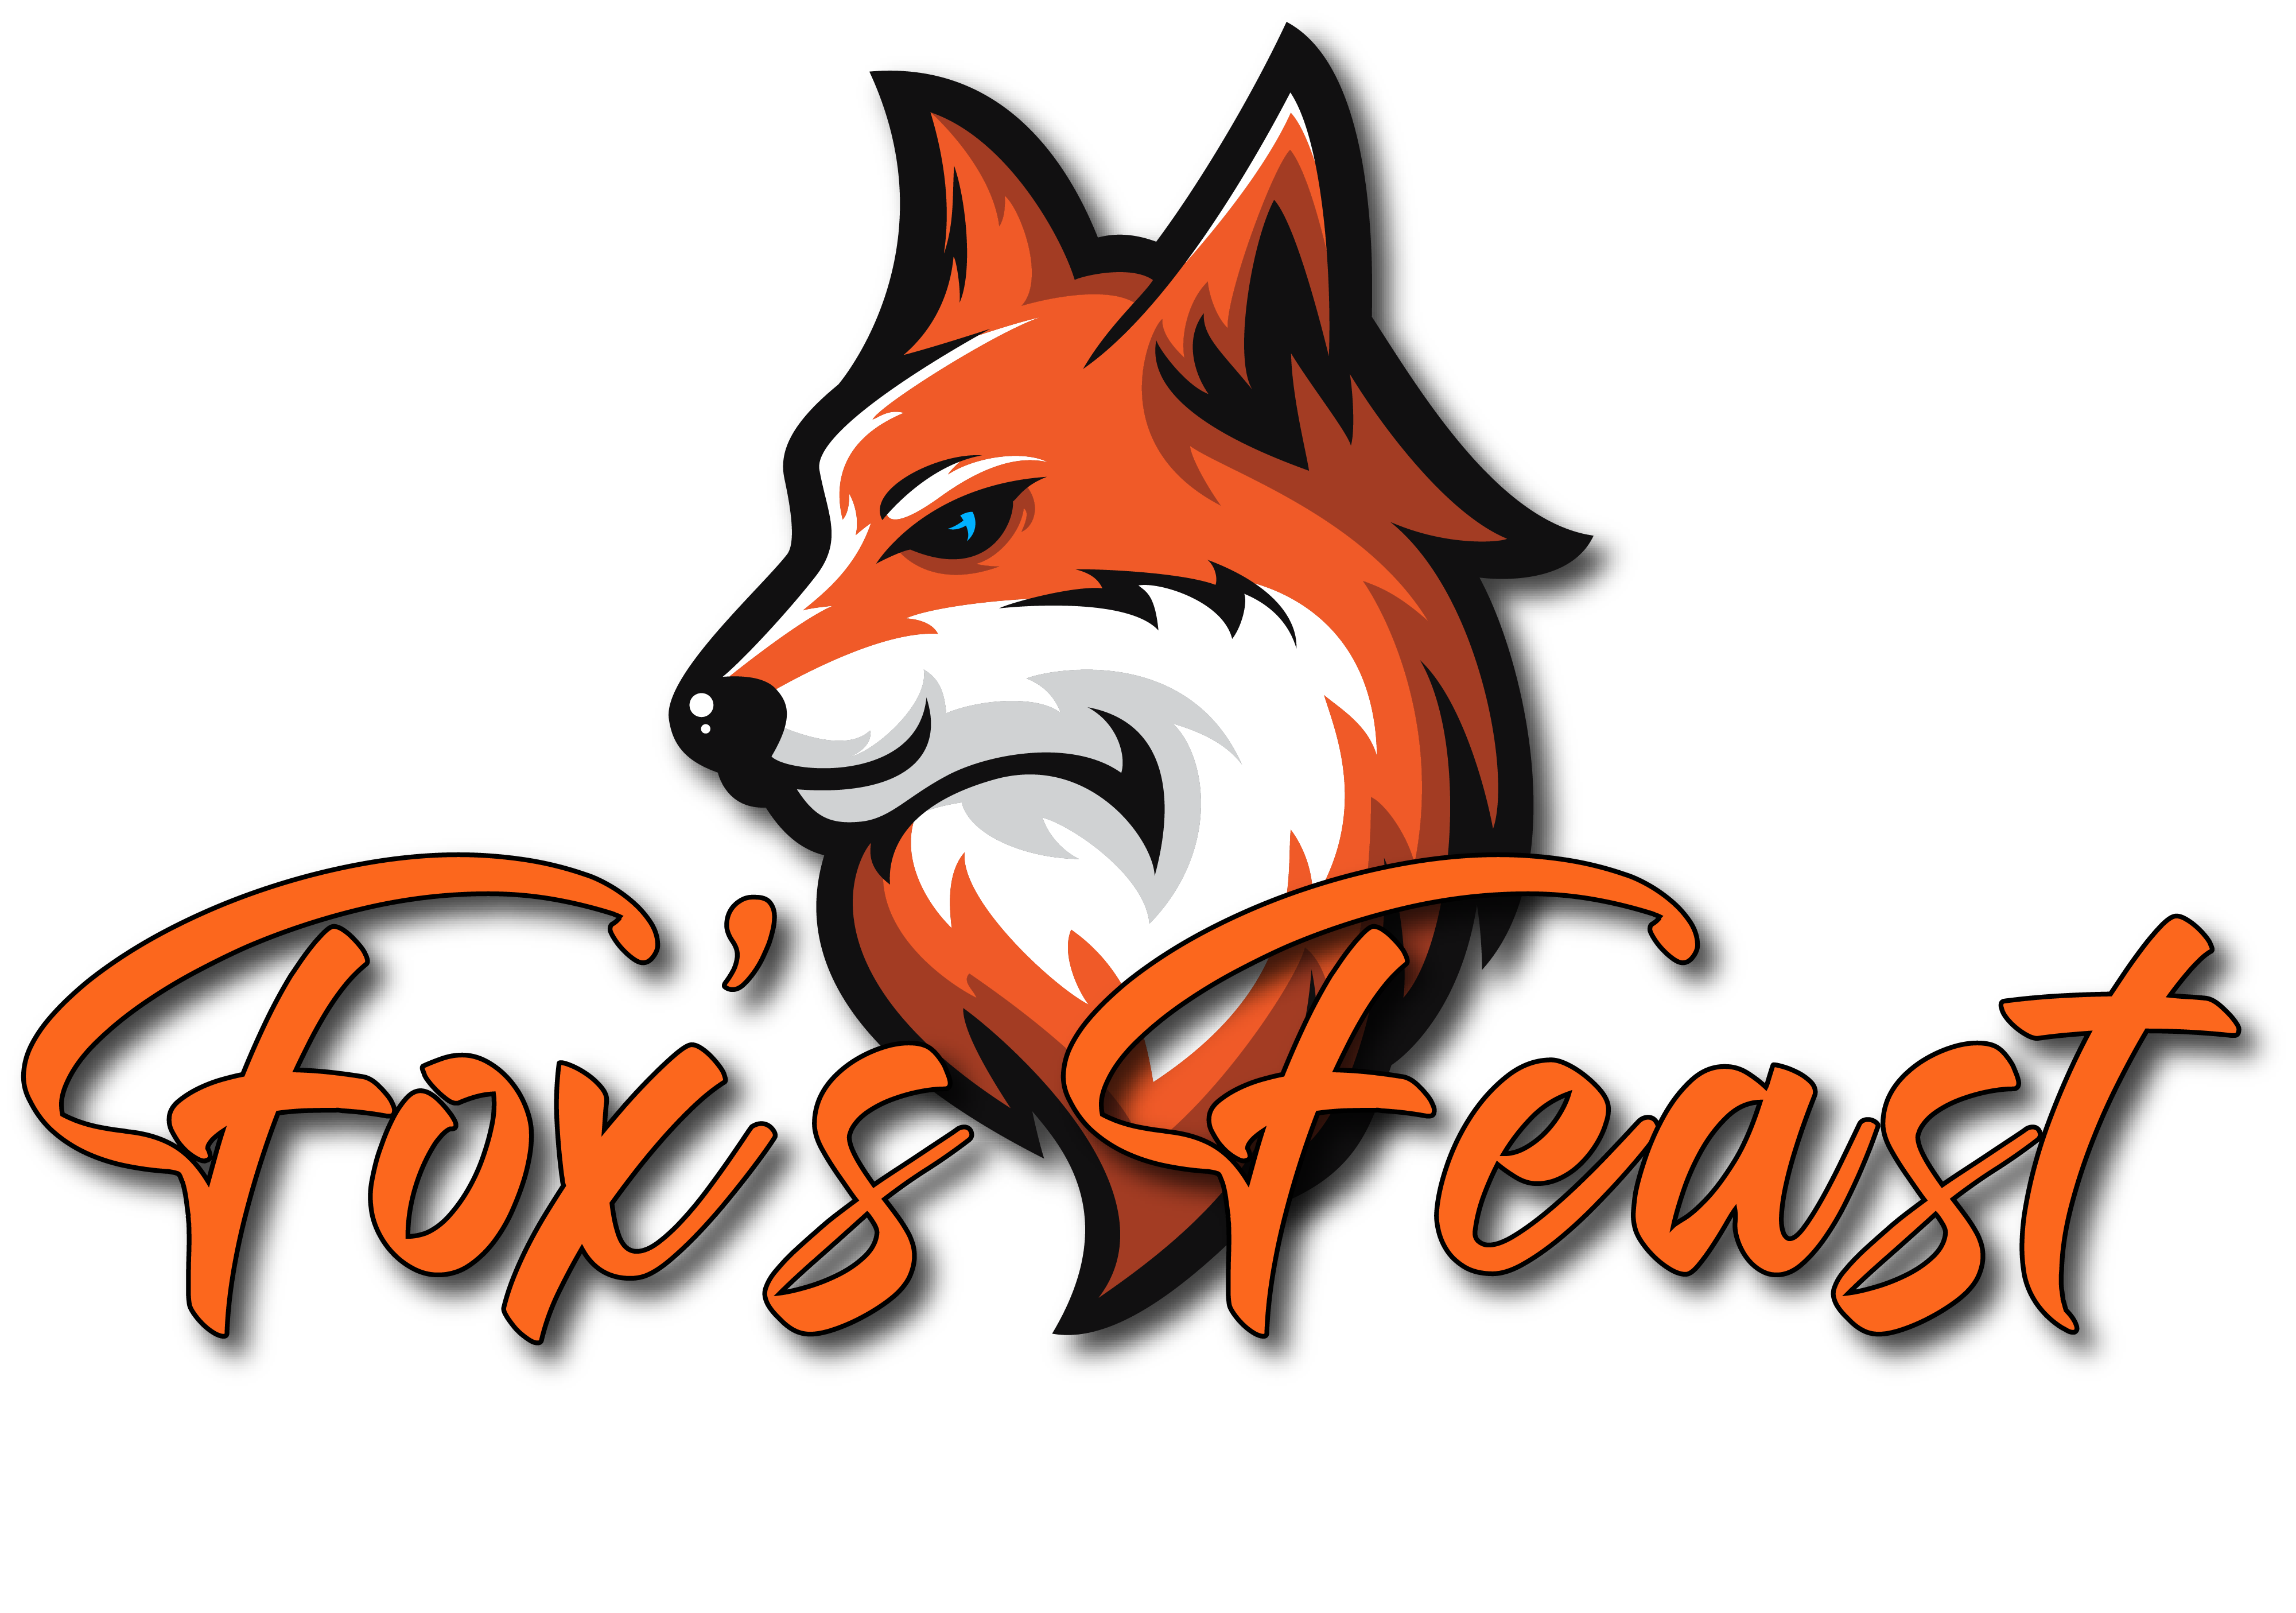 Fox's Feast